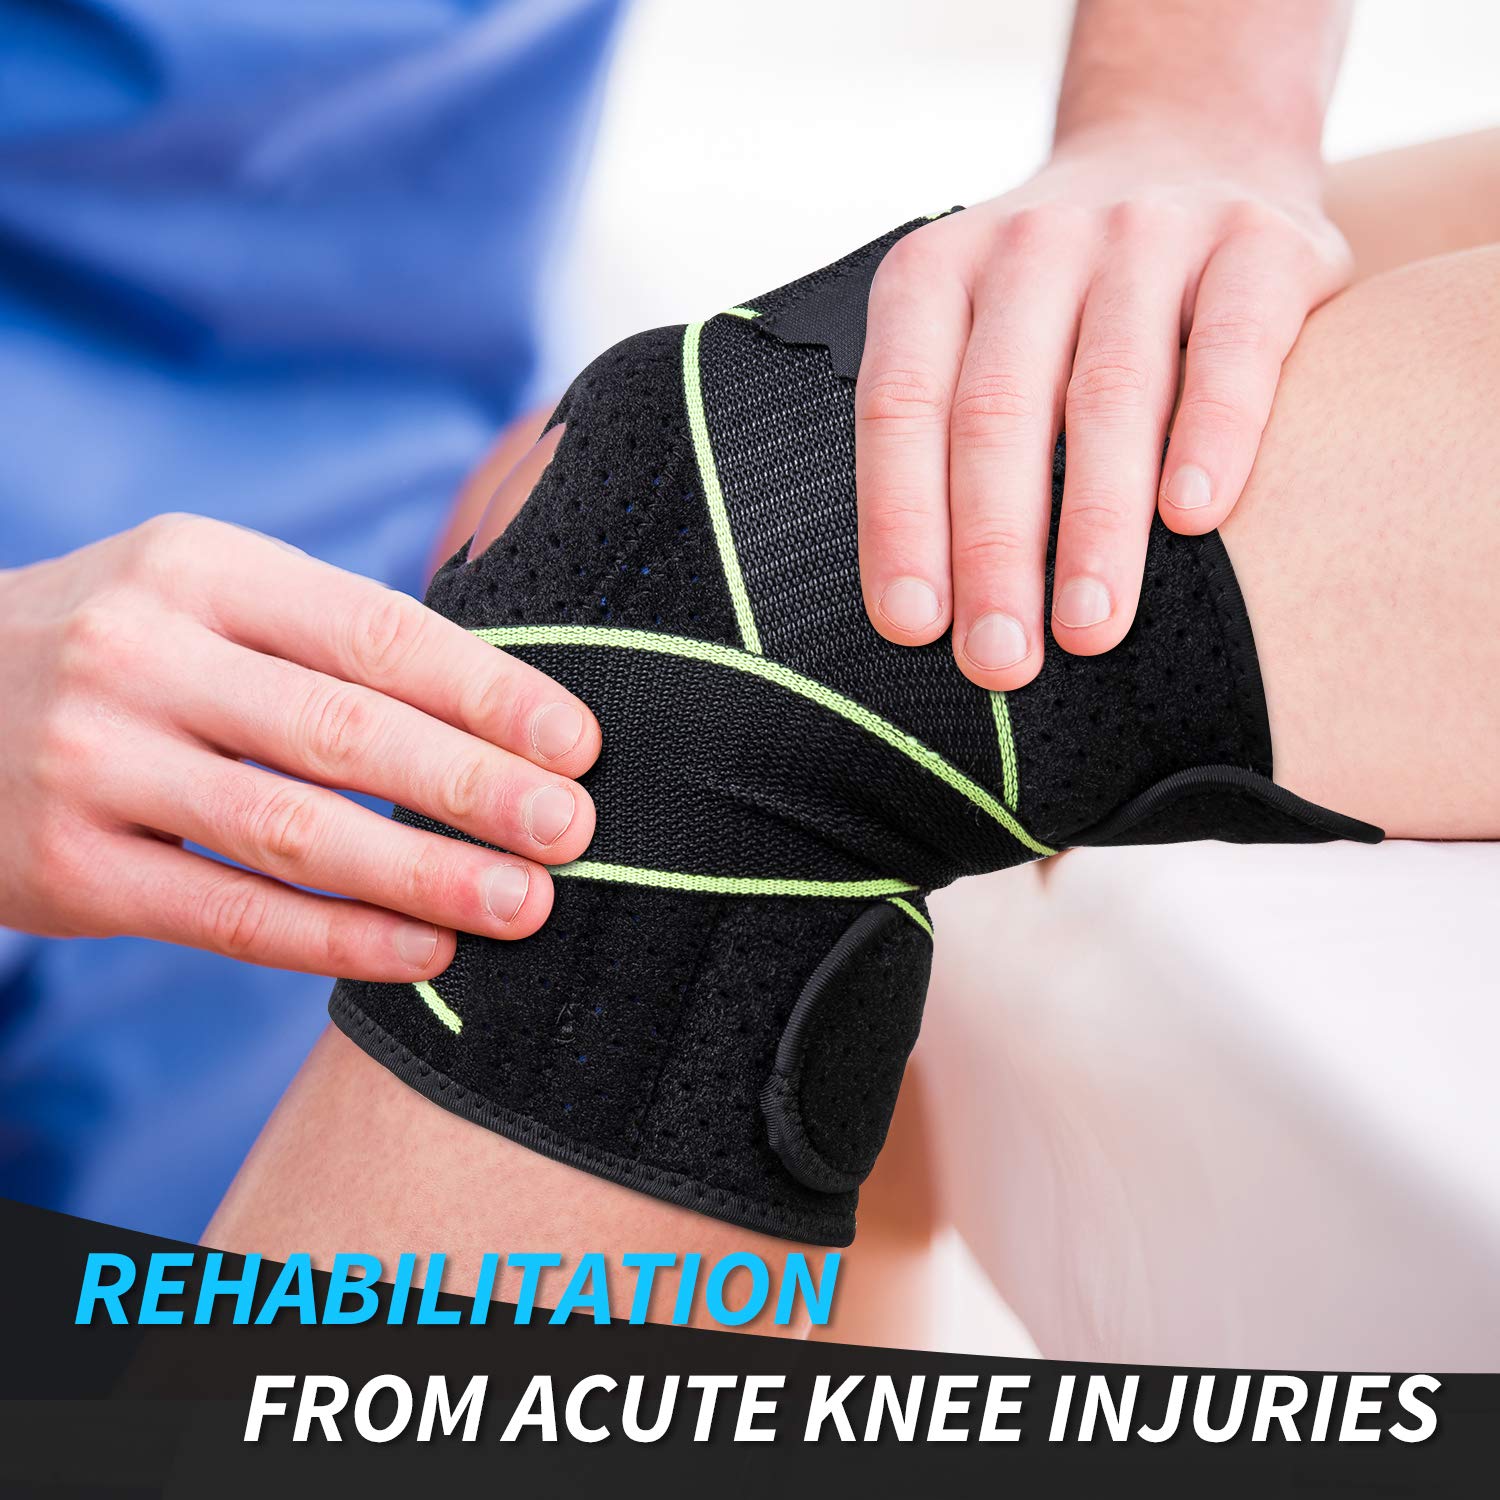 Knee Brace with Side Stabilizers & Patella Gel Pads For Men & Women